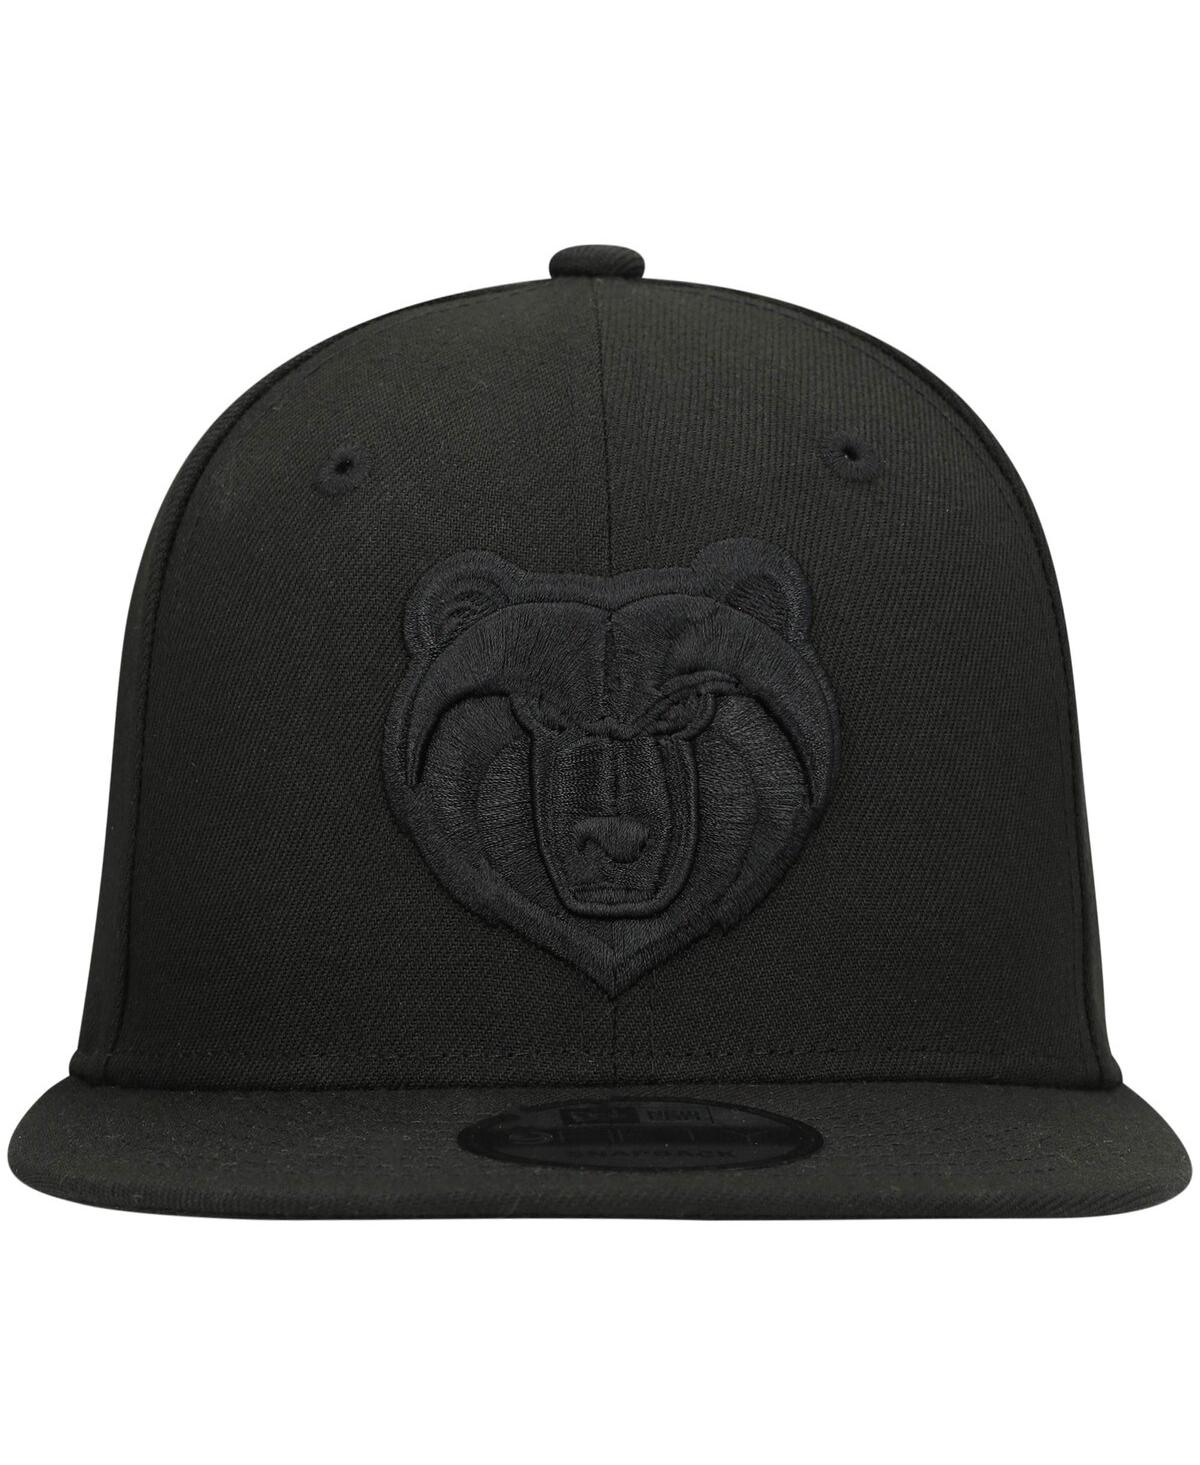 Shop New Era Men's  Memphis Grizzlies Black On Black 9fifty Snapback Hat